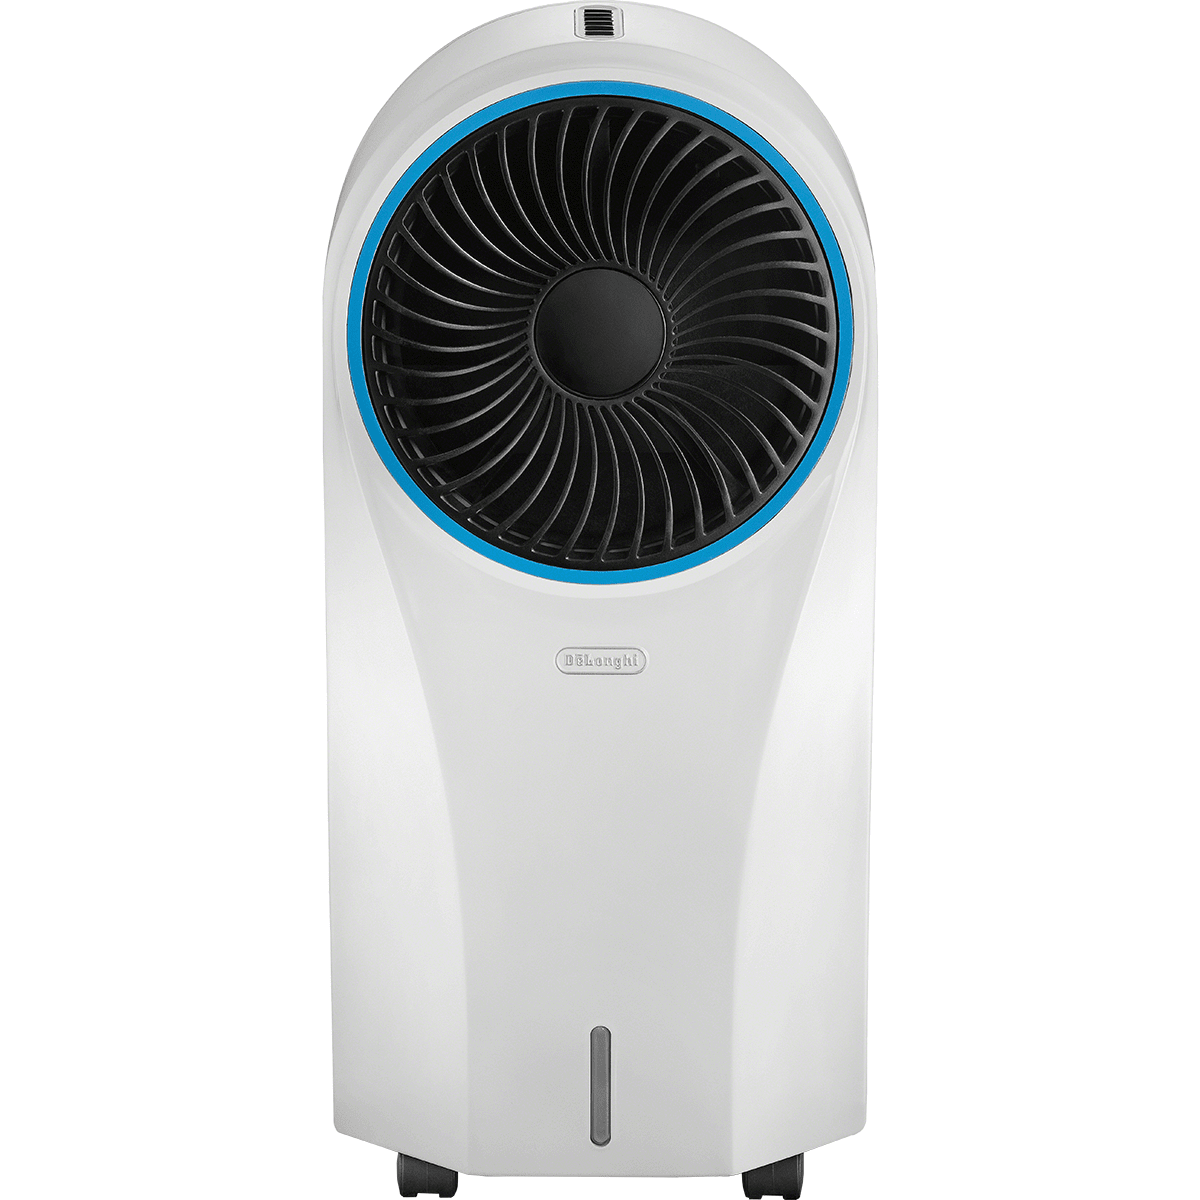 DeLonghi 206 CFM Portable Evaporative Cooler